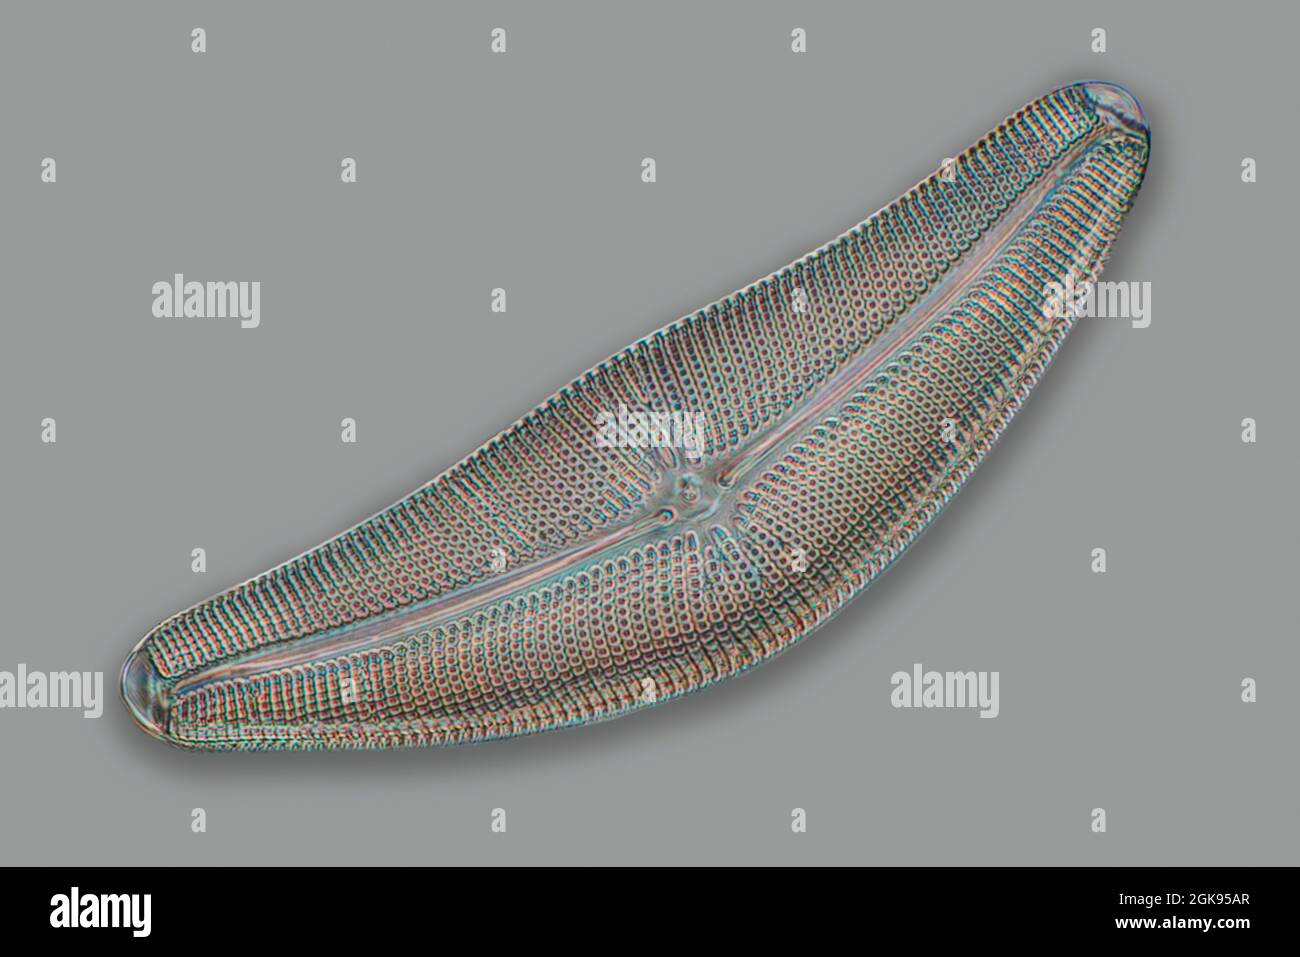 diatom (Diatomeae), Diatoms from Emeralda, light microscopy, light-field microscopy, magnification x 140 related to a print of 35 mm width, USA, Stock Photo